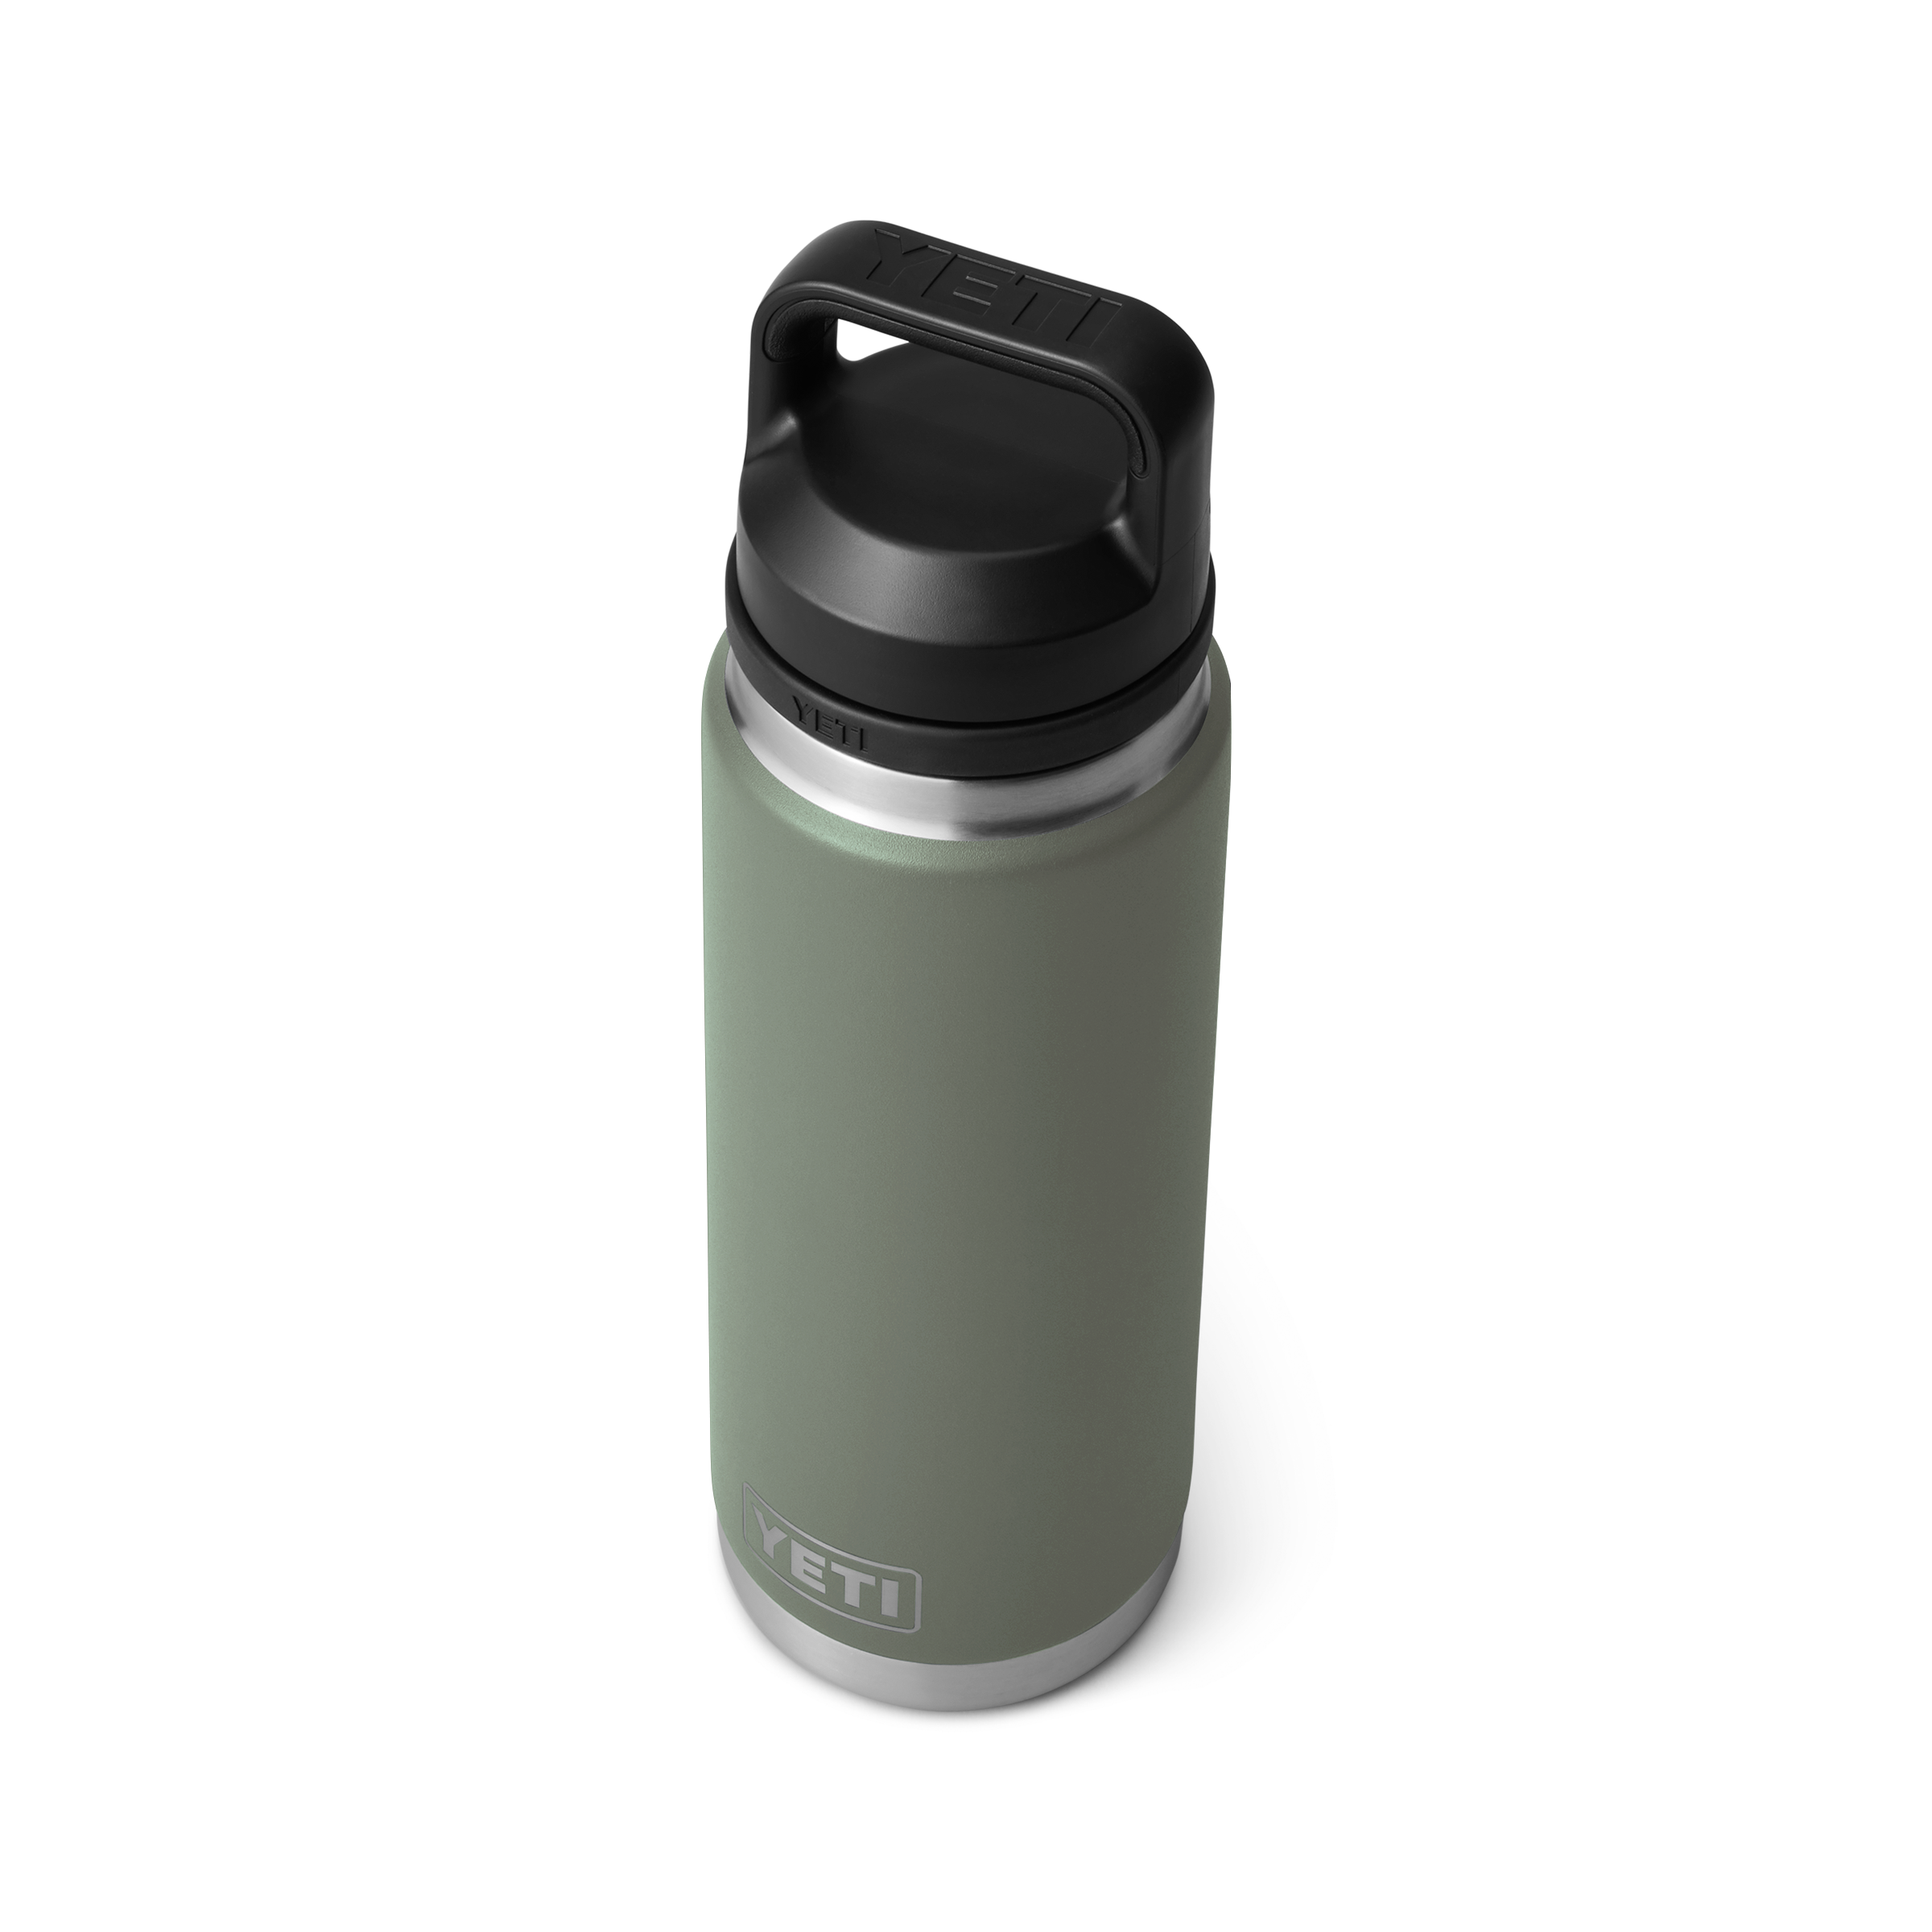 Yeti - 26 oz Rambler Bottle with Chug Cap White